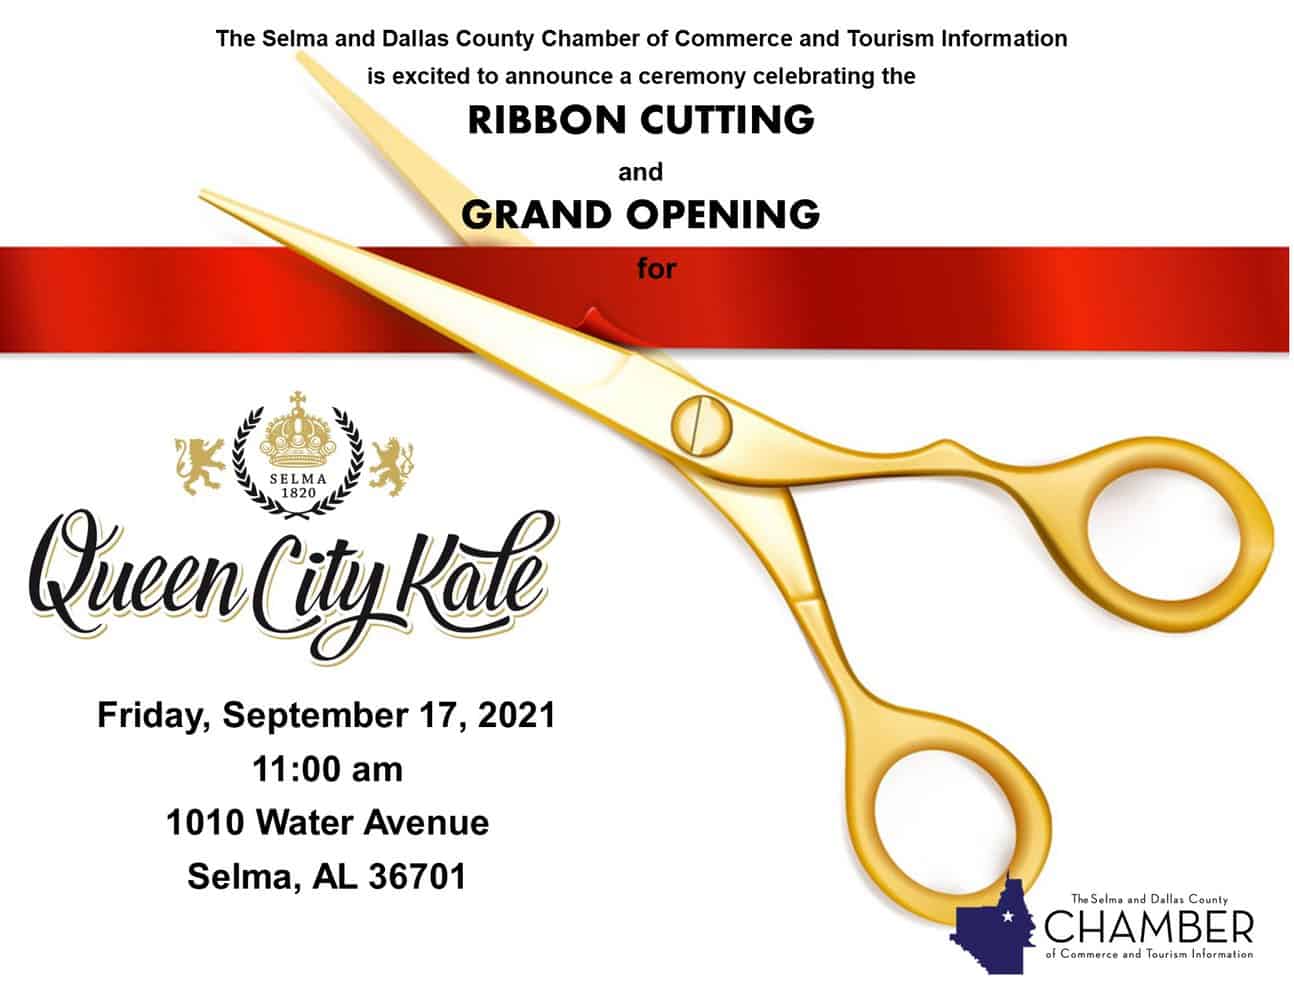 Queen_City_Kale_Grand_Opening_Ribbon_Cutting_Celebration.jpg